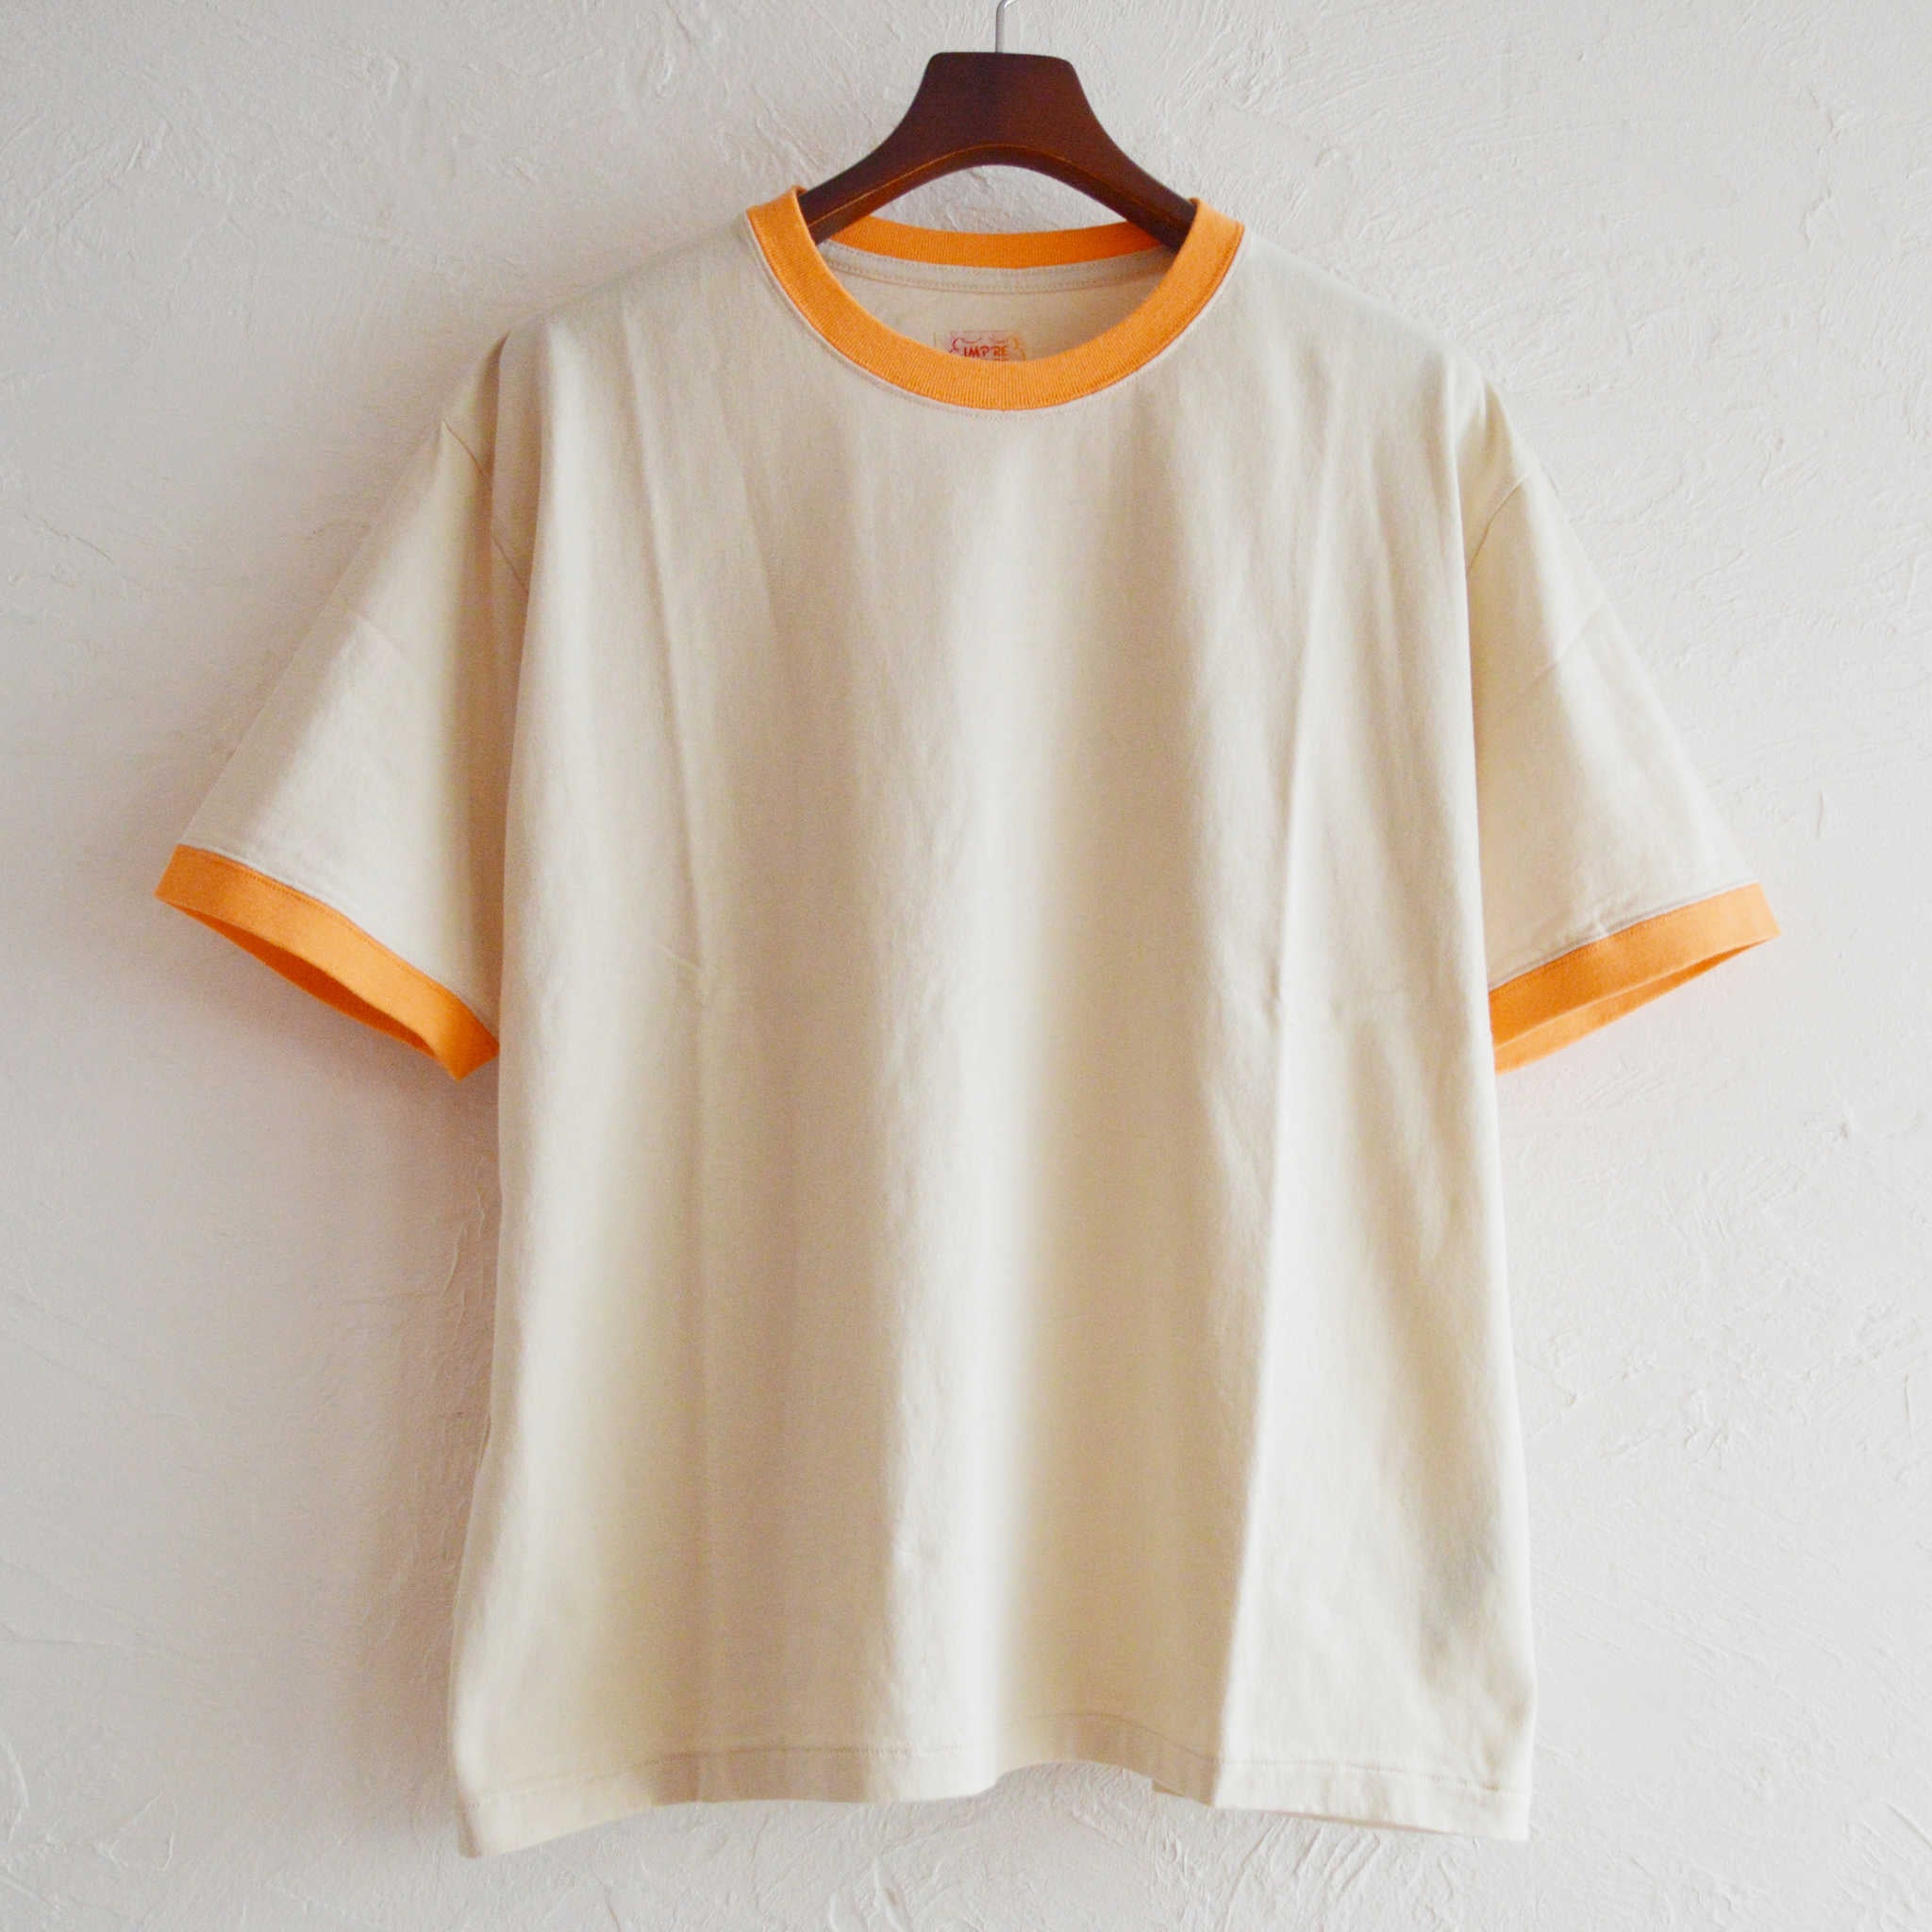 IMPRESTORE インプレストア / Fredy | Ringer Tee shirt  リンガーティーシャツ (ORANGE オレンジ)